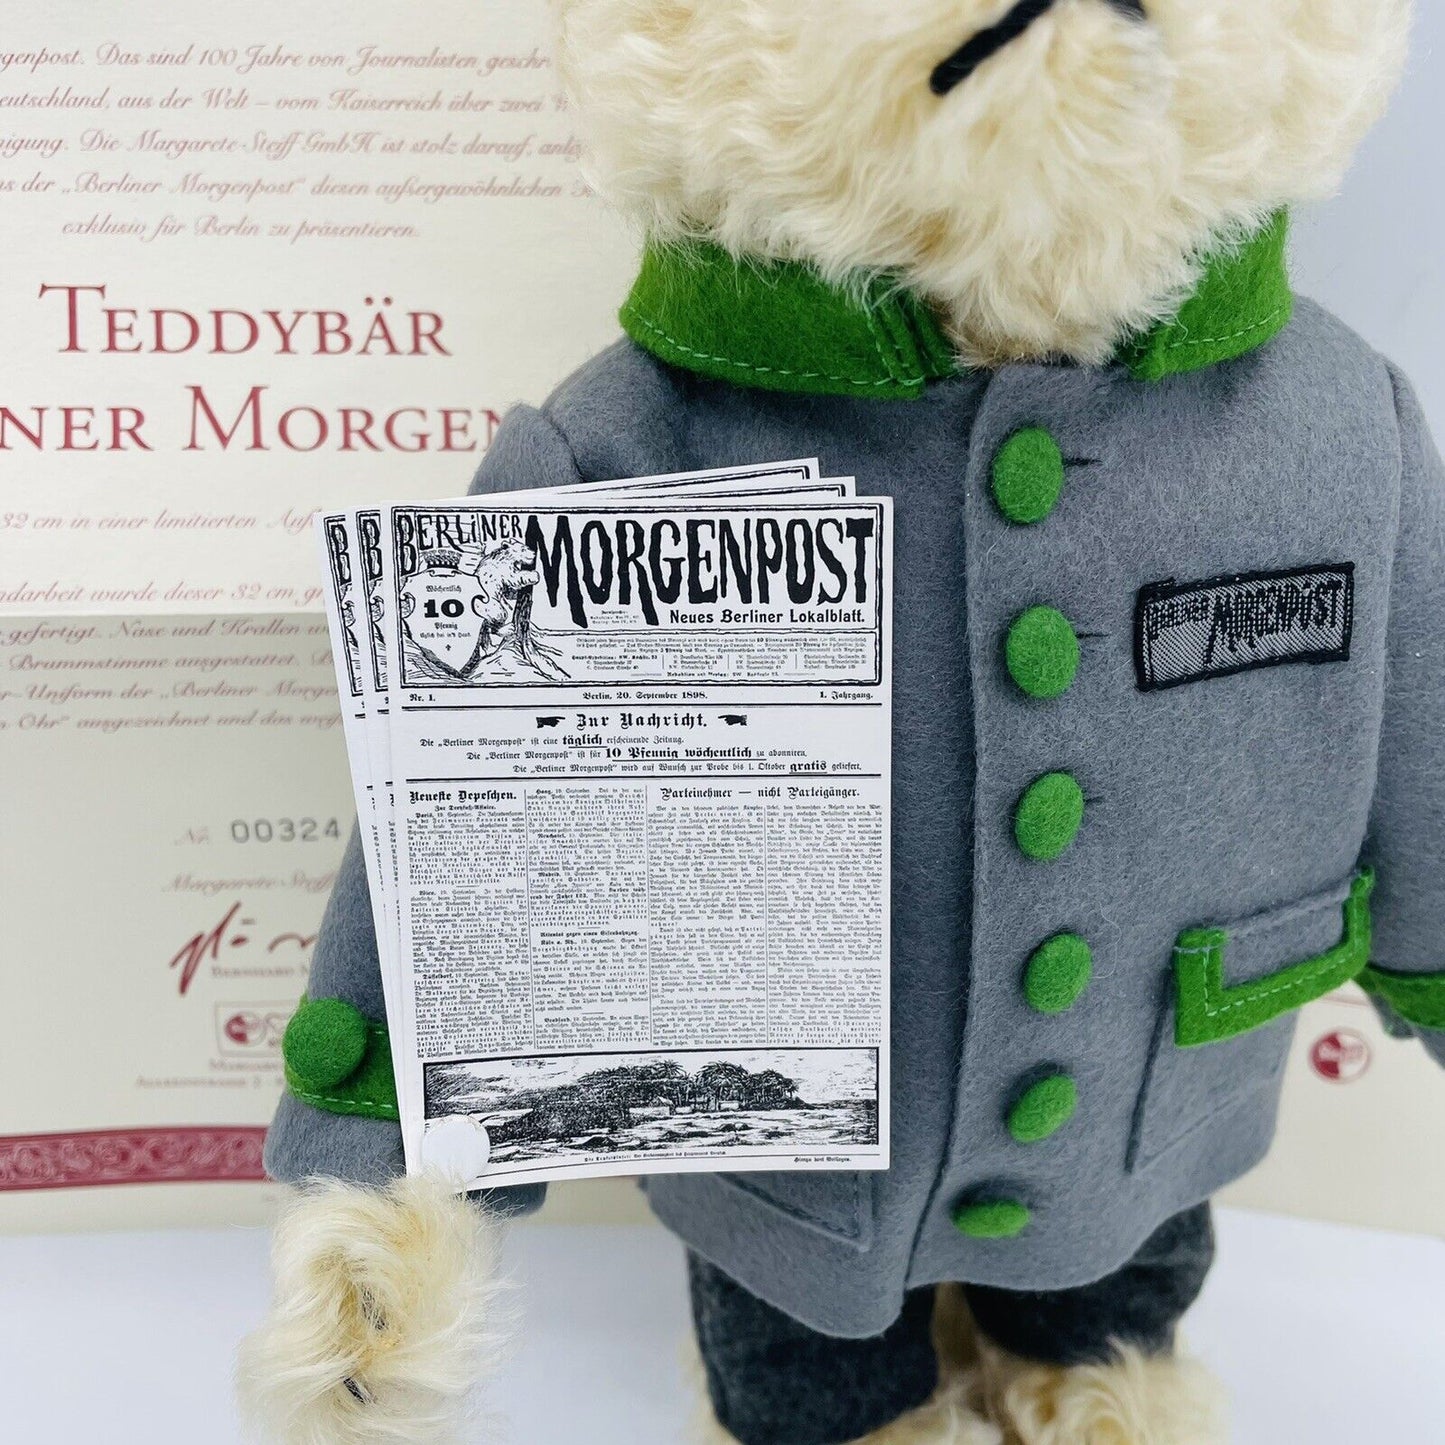 Steiff Teddybär Berliner Morgenpost 655425 limitiert 1500 aus 1998 32cm